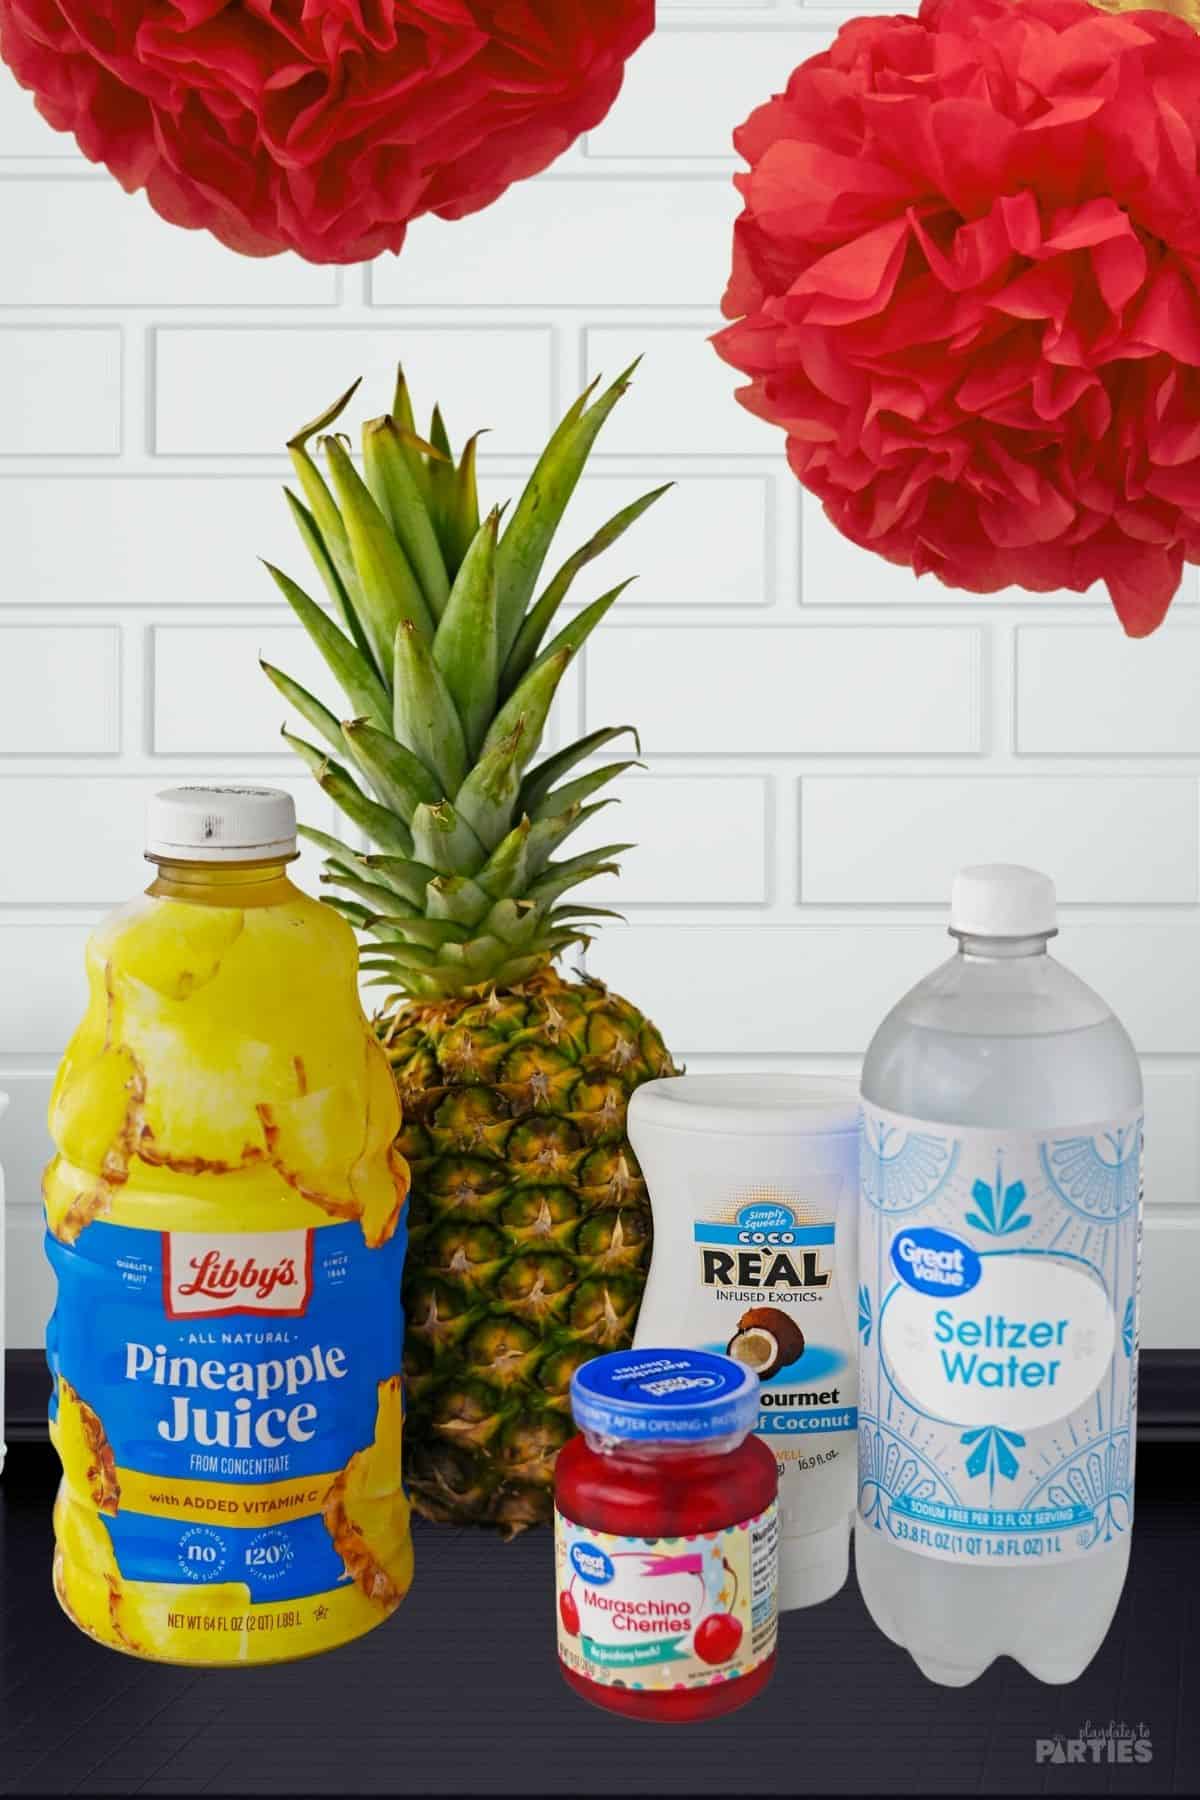 Ingredients include pineapple juice, seltzer water, coconut cream, and cherries.